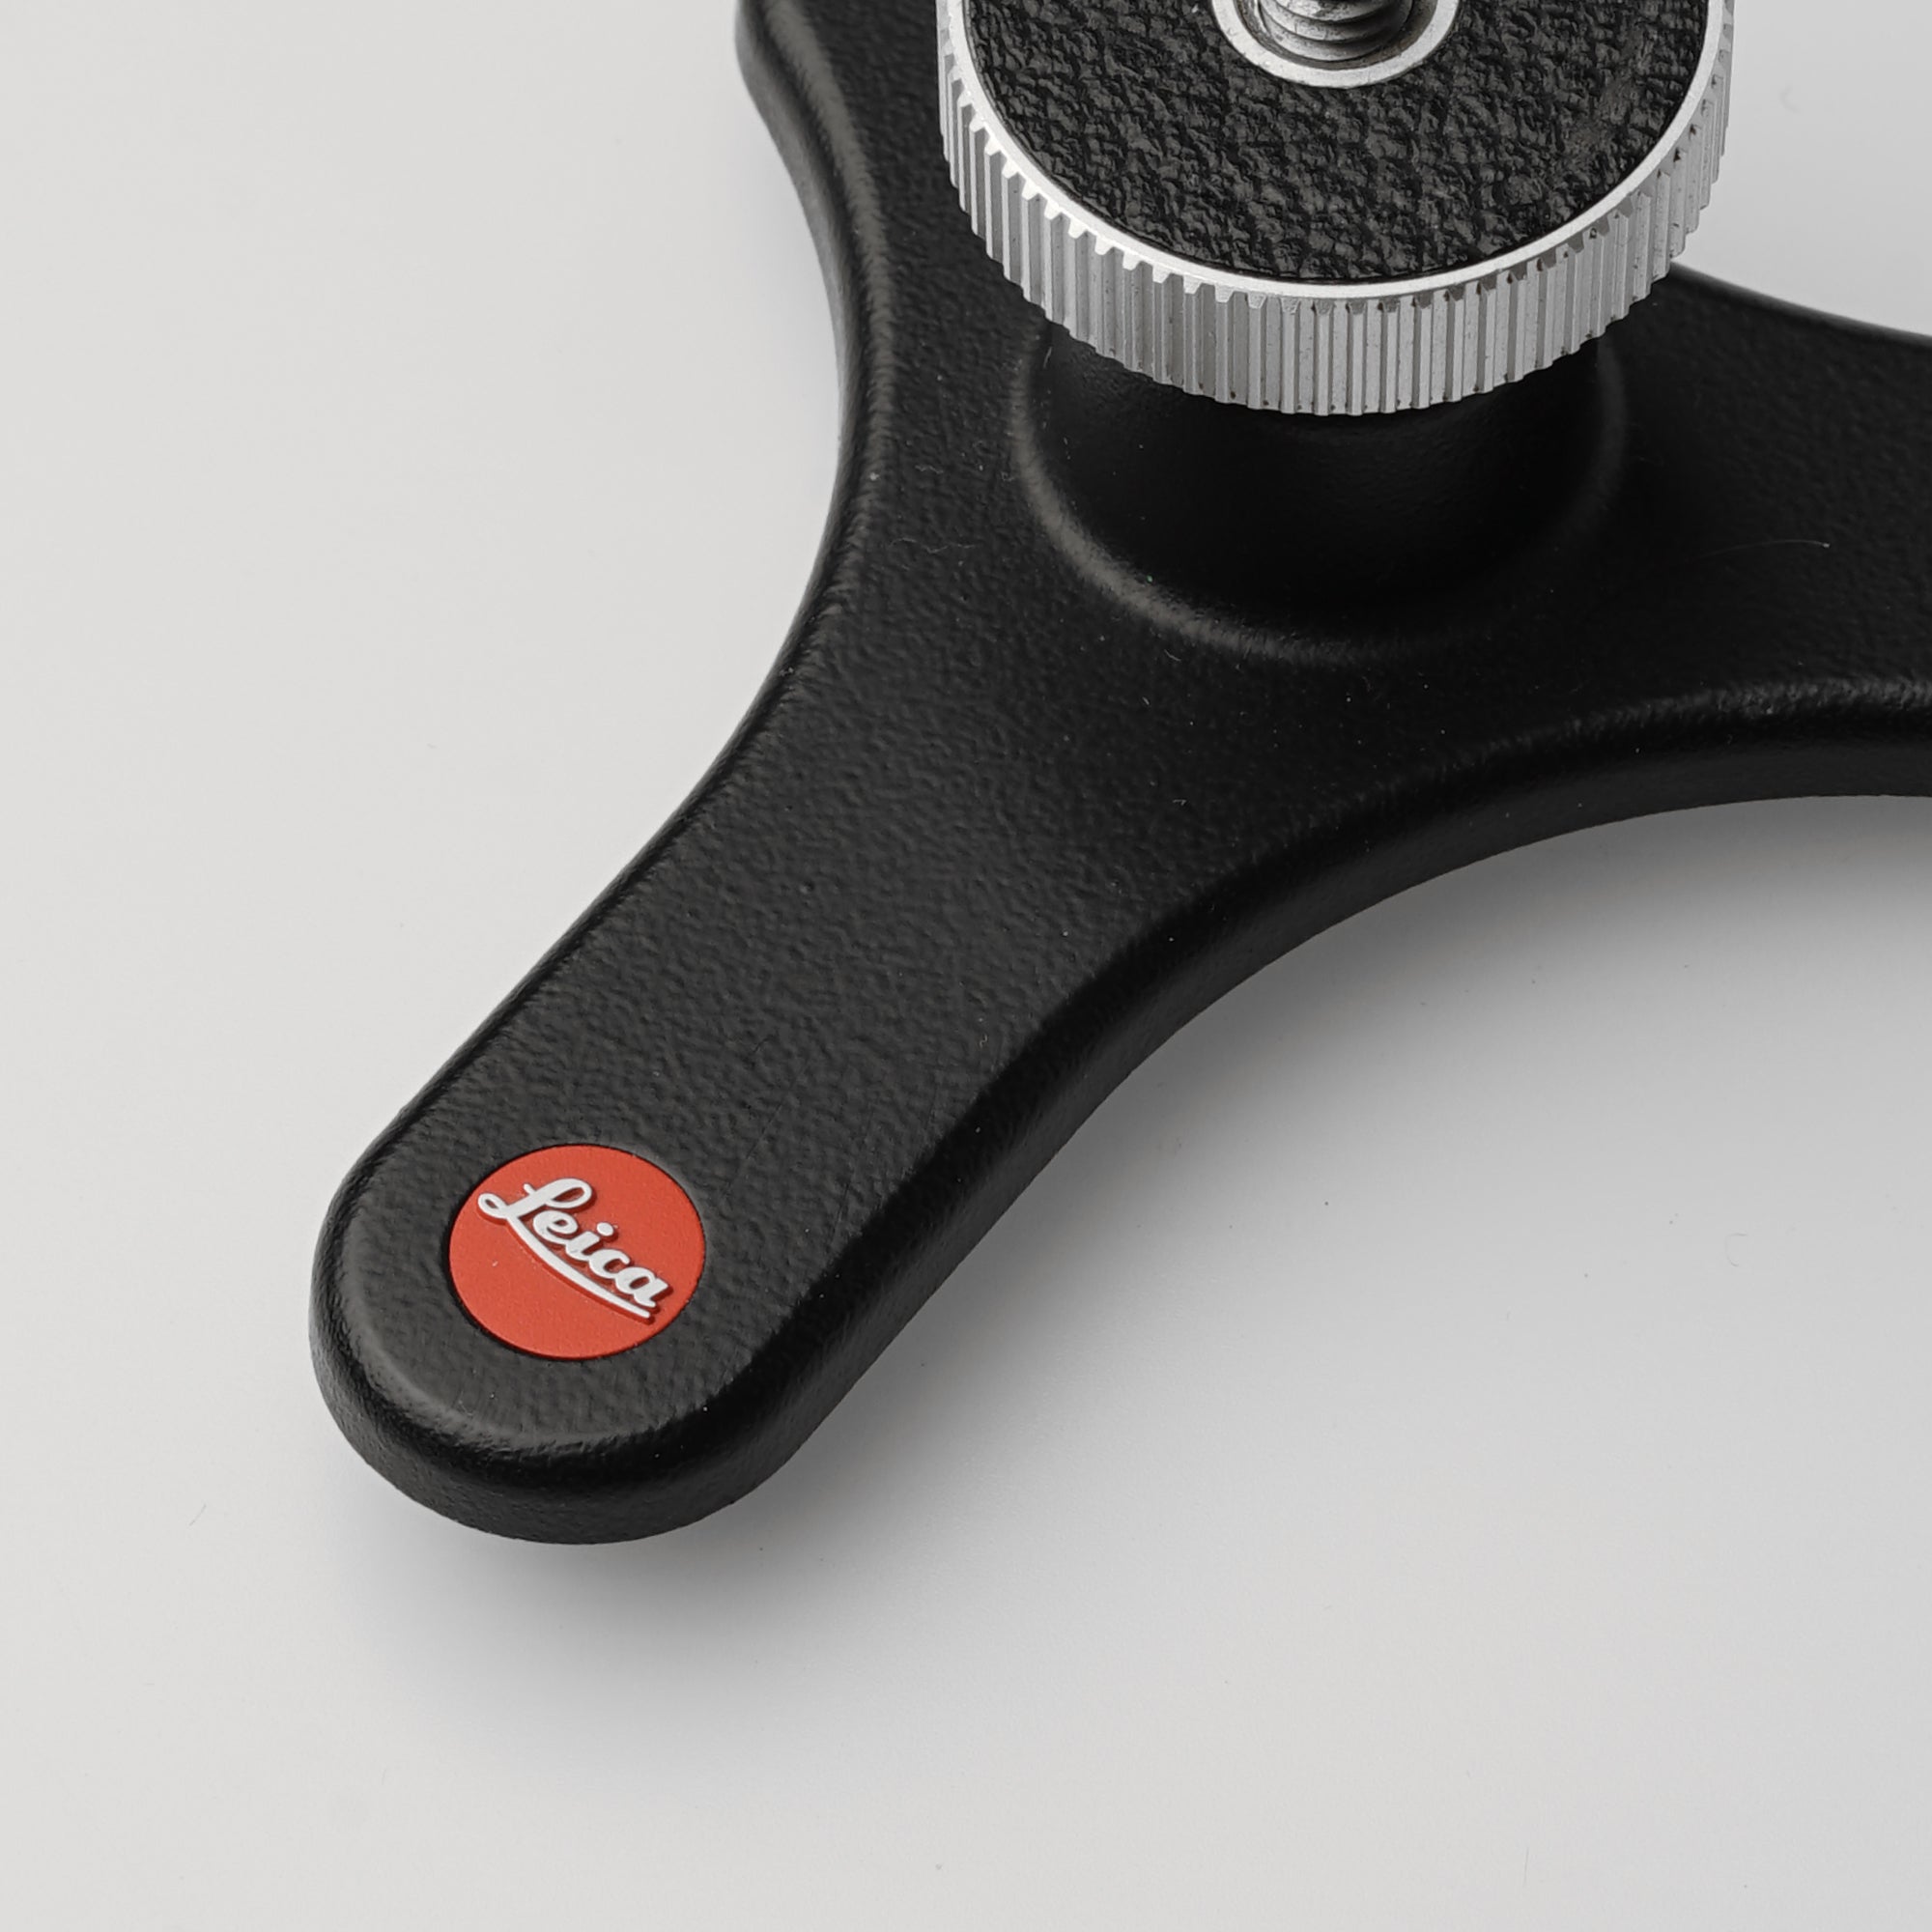 Buy Leica Mini tripod now at Analogue Amsterdam